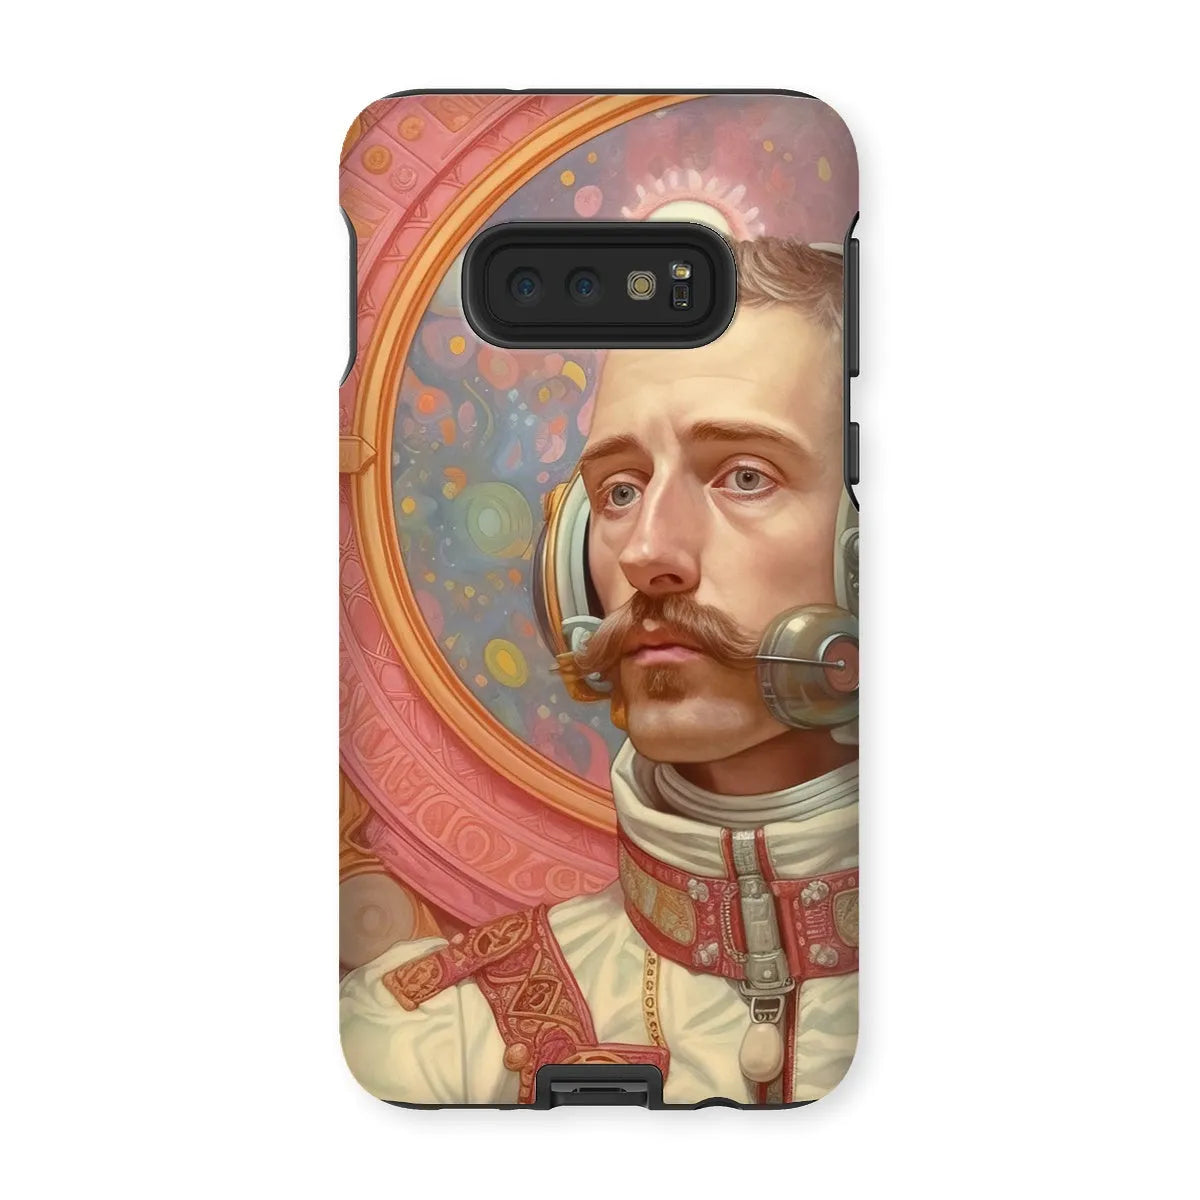 Axel - Gay German Astronaut Aesthetic Art Phone Case - Samsung Galaxy S10e / Matte - Mobile Phone Cases - Aesthetic Art